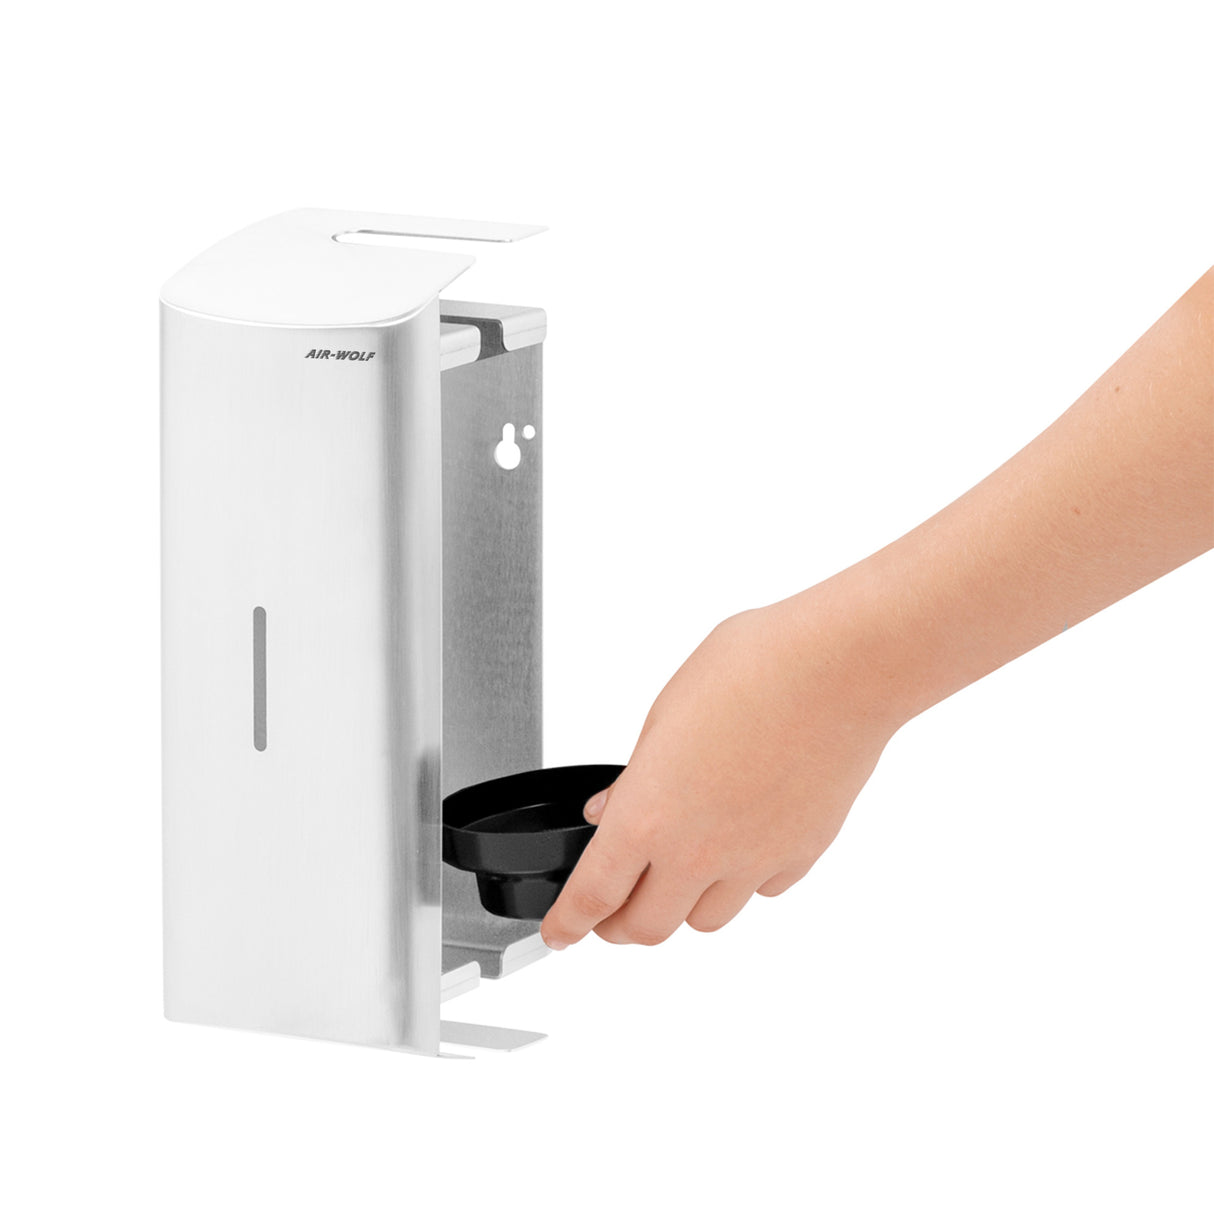 AIR-WOLF - Toiletbørsteholder - med lukket front